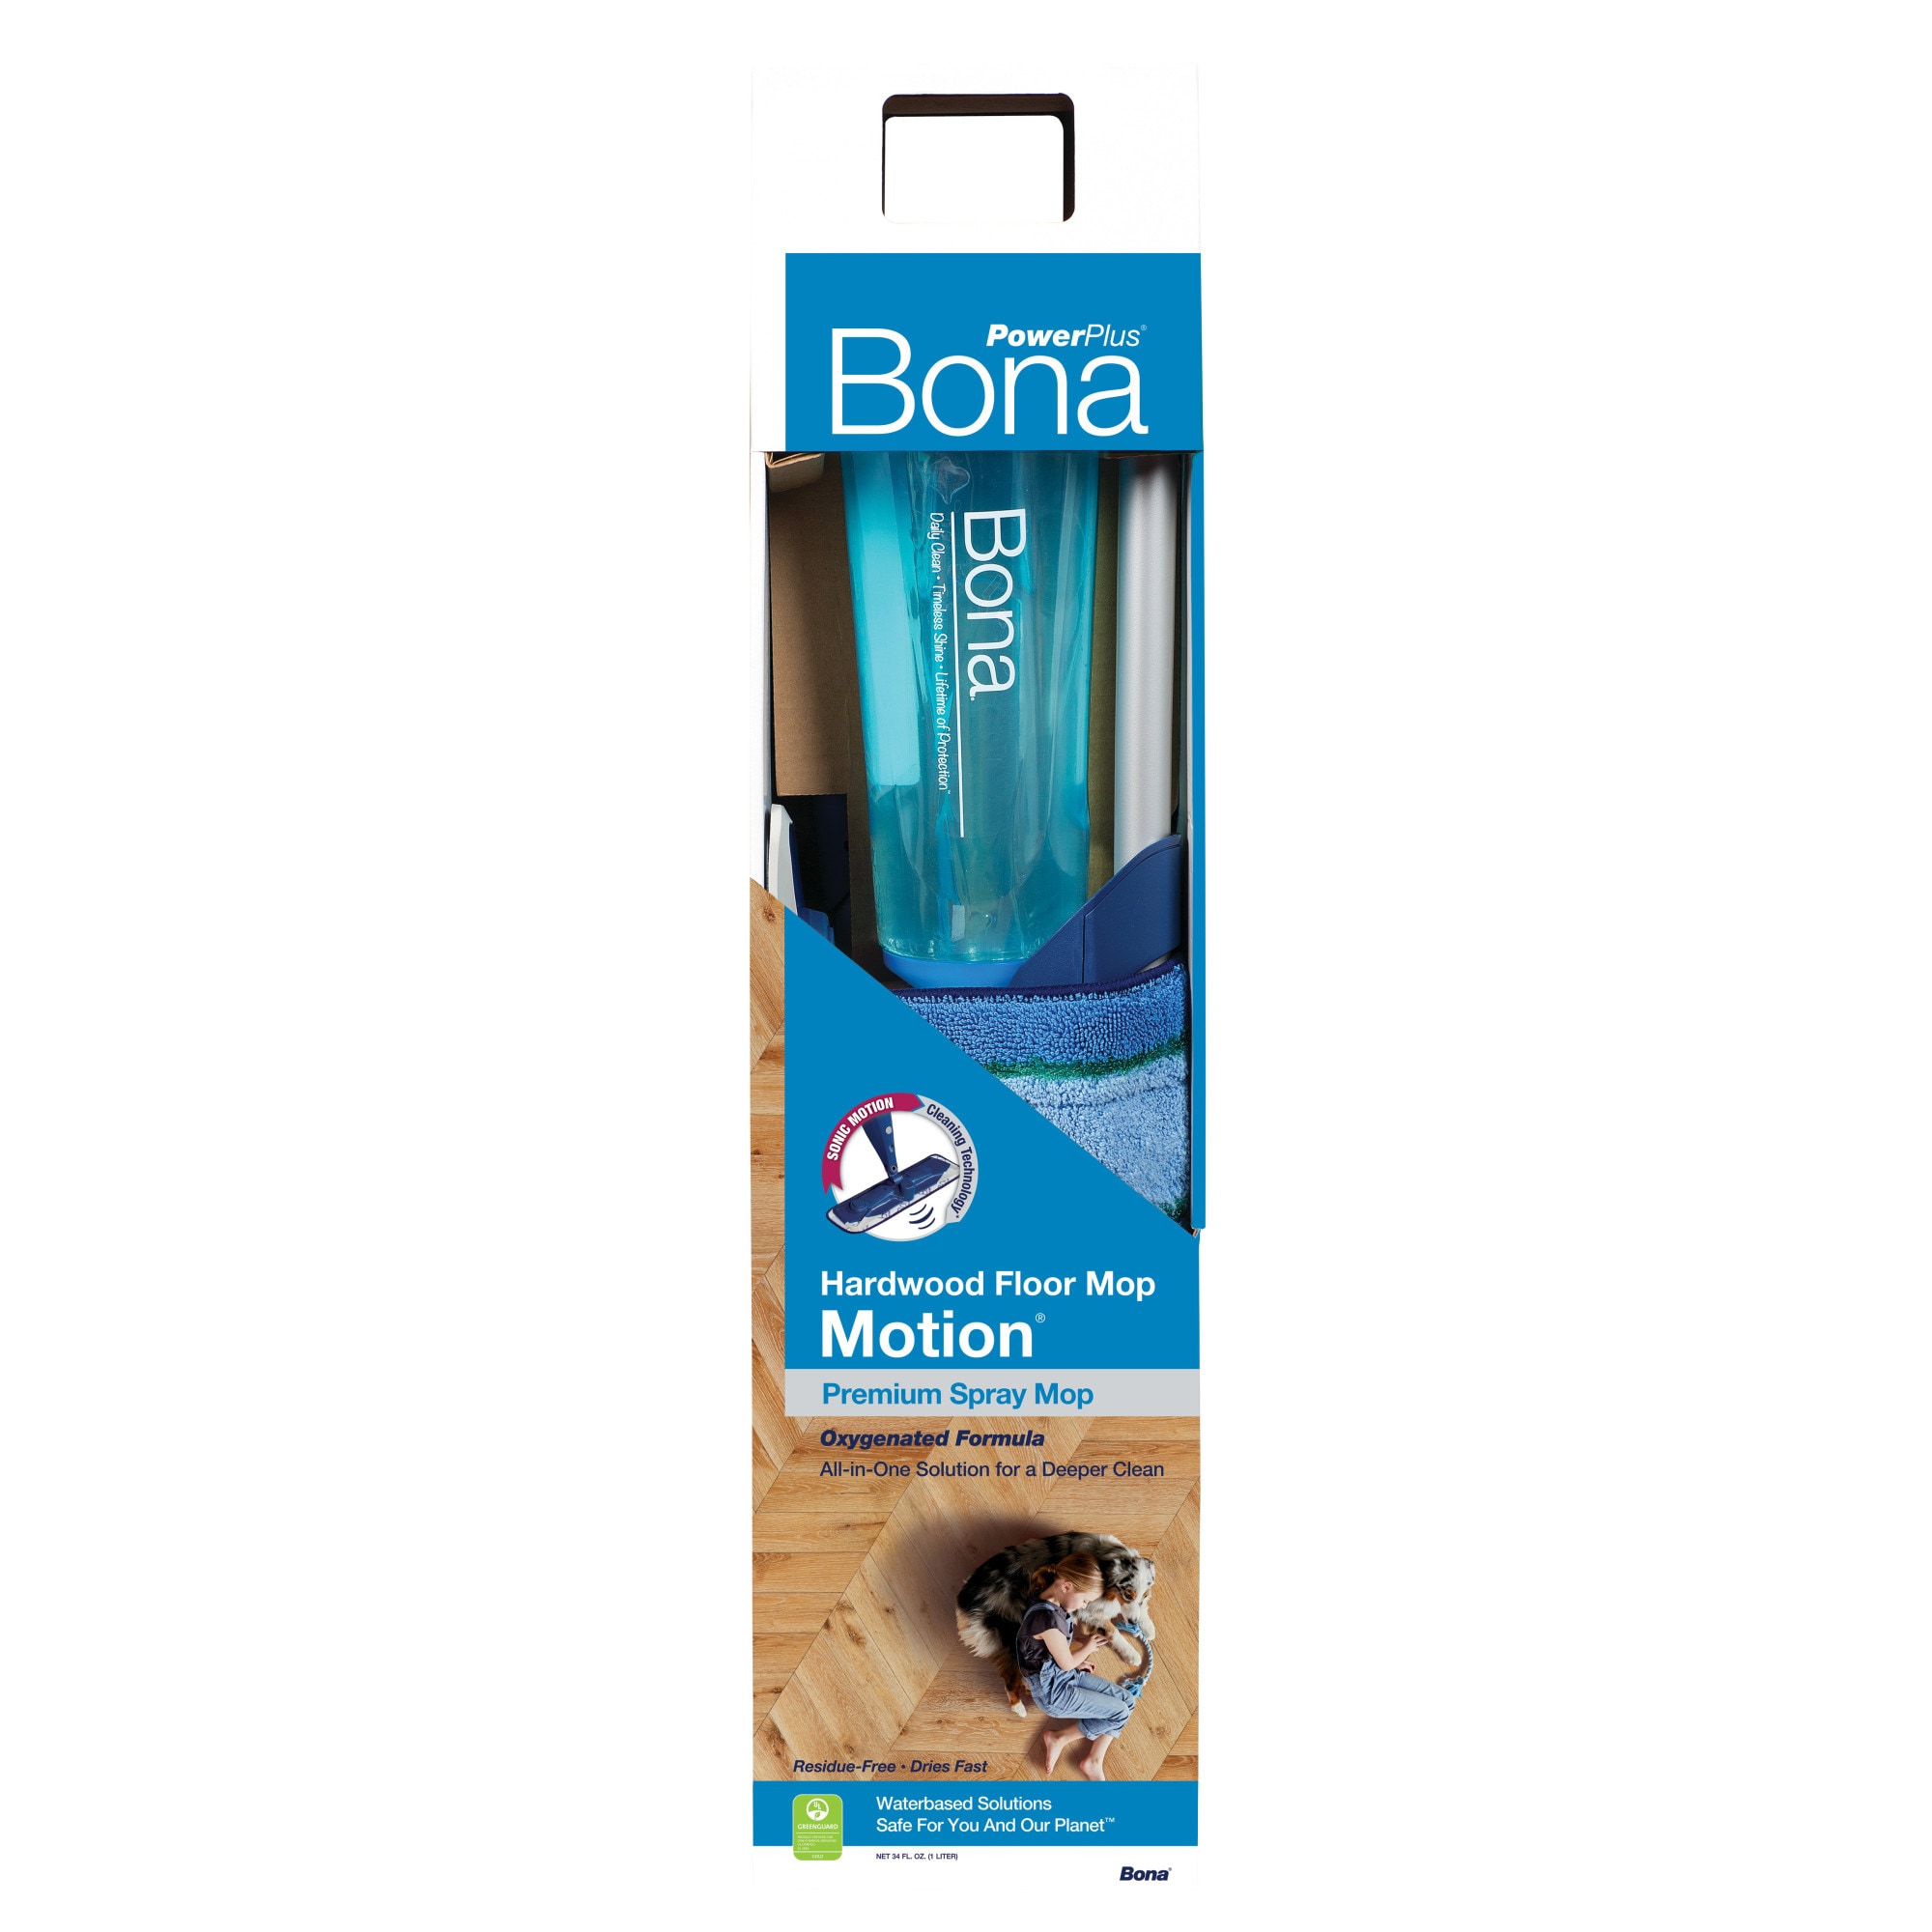 Bona PowerPlus Premium Motion Spray Mop for Hardwood Floors (WM710013536) 